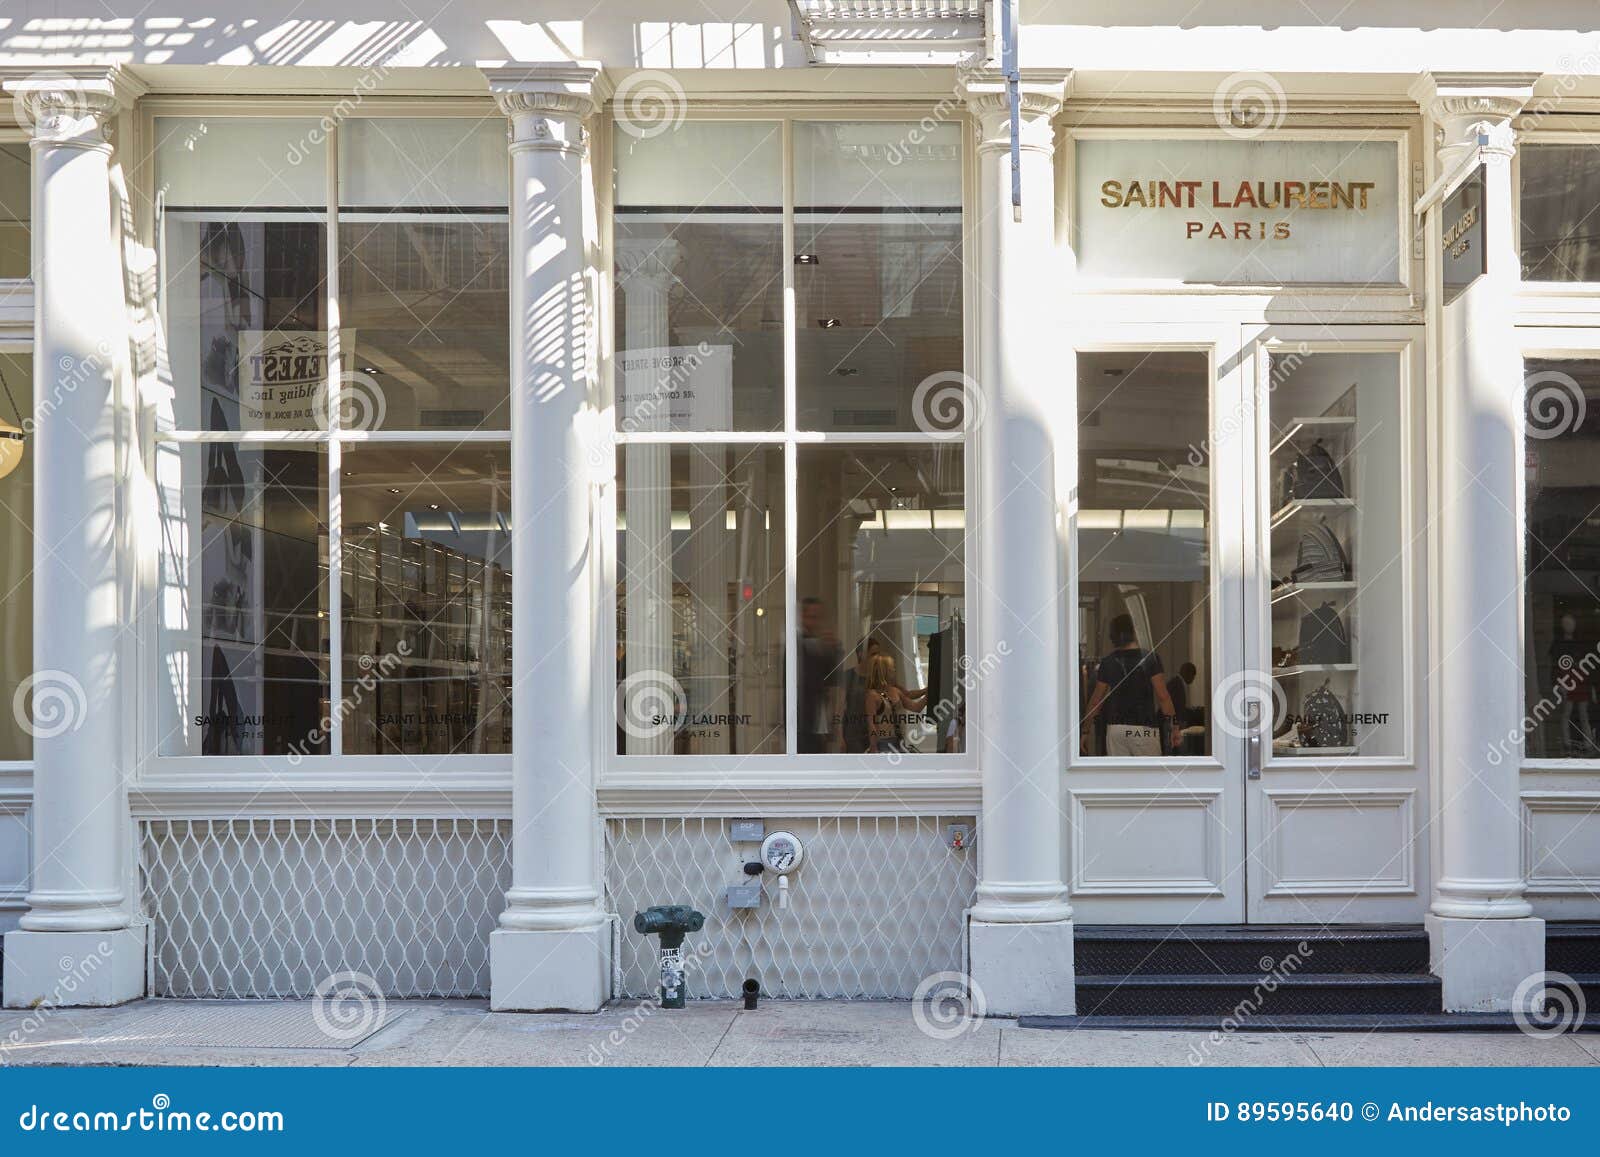 Saint Laurent Shop View In Greene St, New York Editorial Image - Image of laurent, shop: 89595640